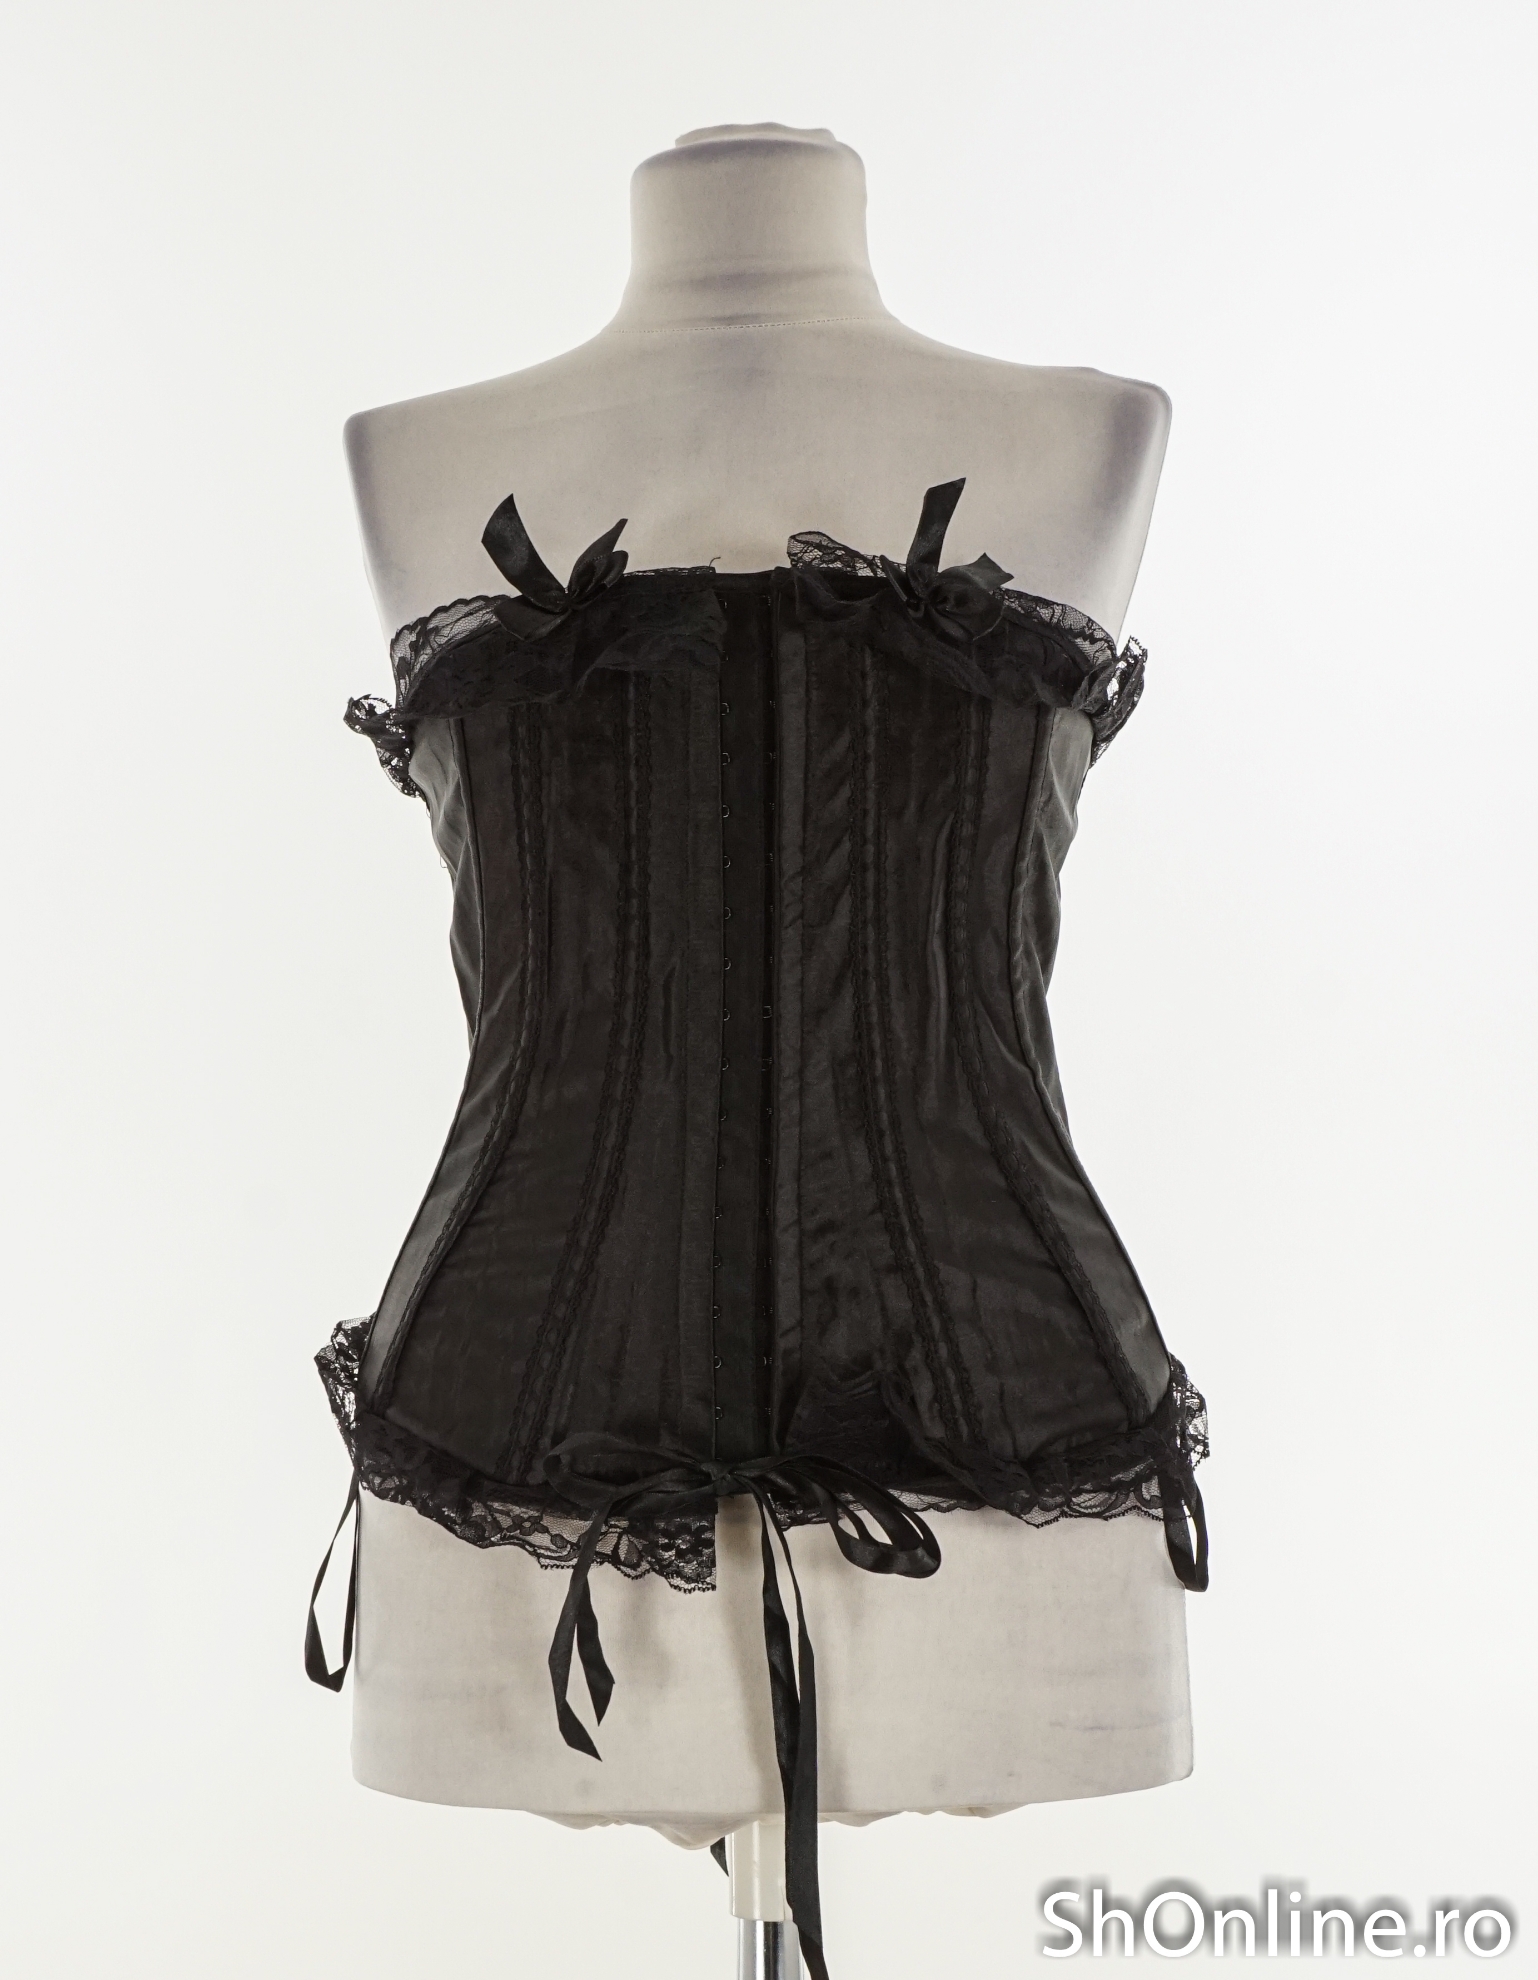 https://shonline.ro/images/thumbs/0079874_corset-dama-vaacodor-marimea-s.jpeg